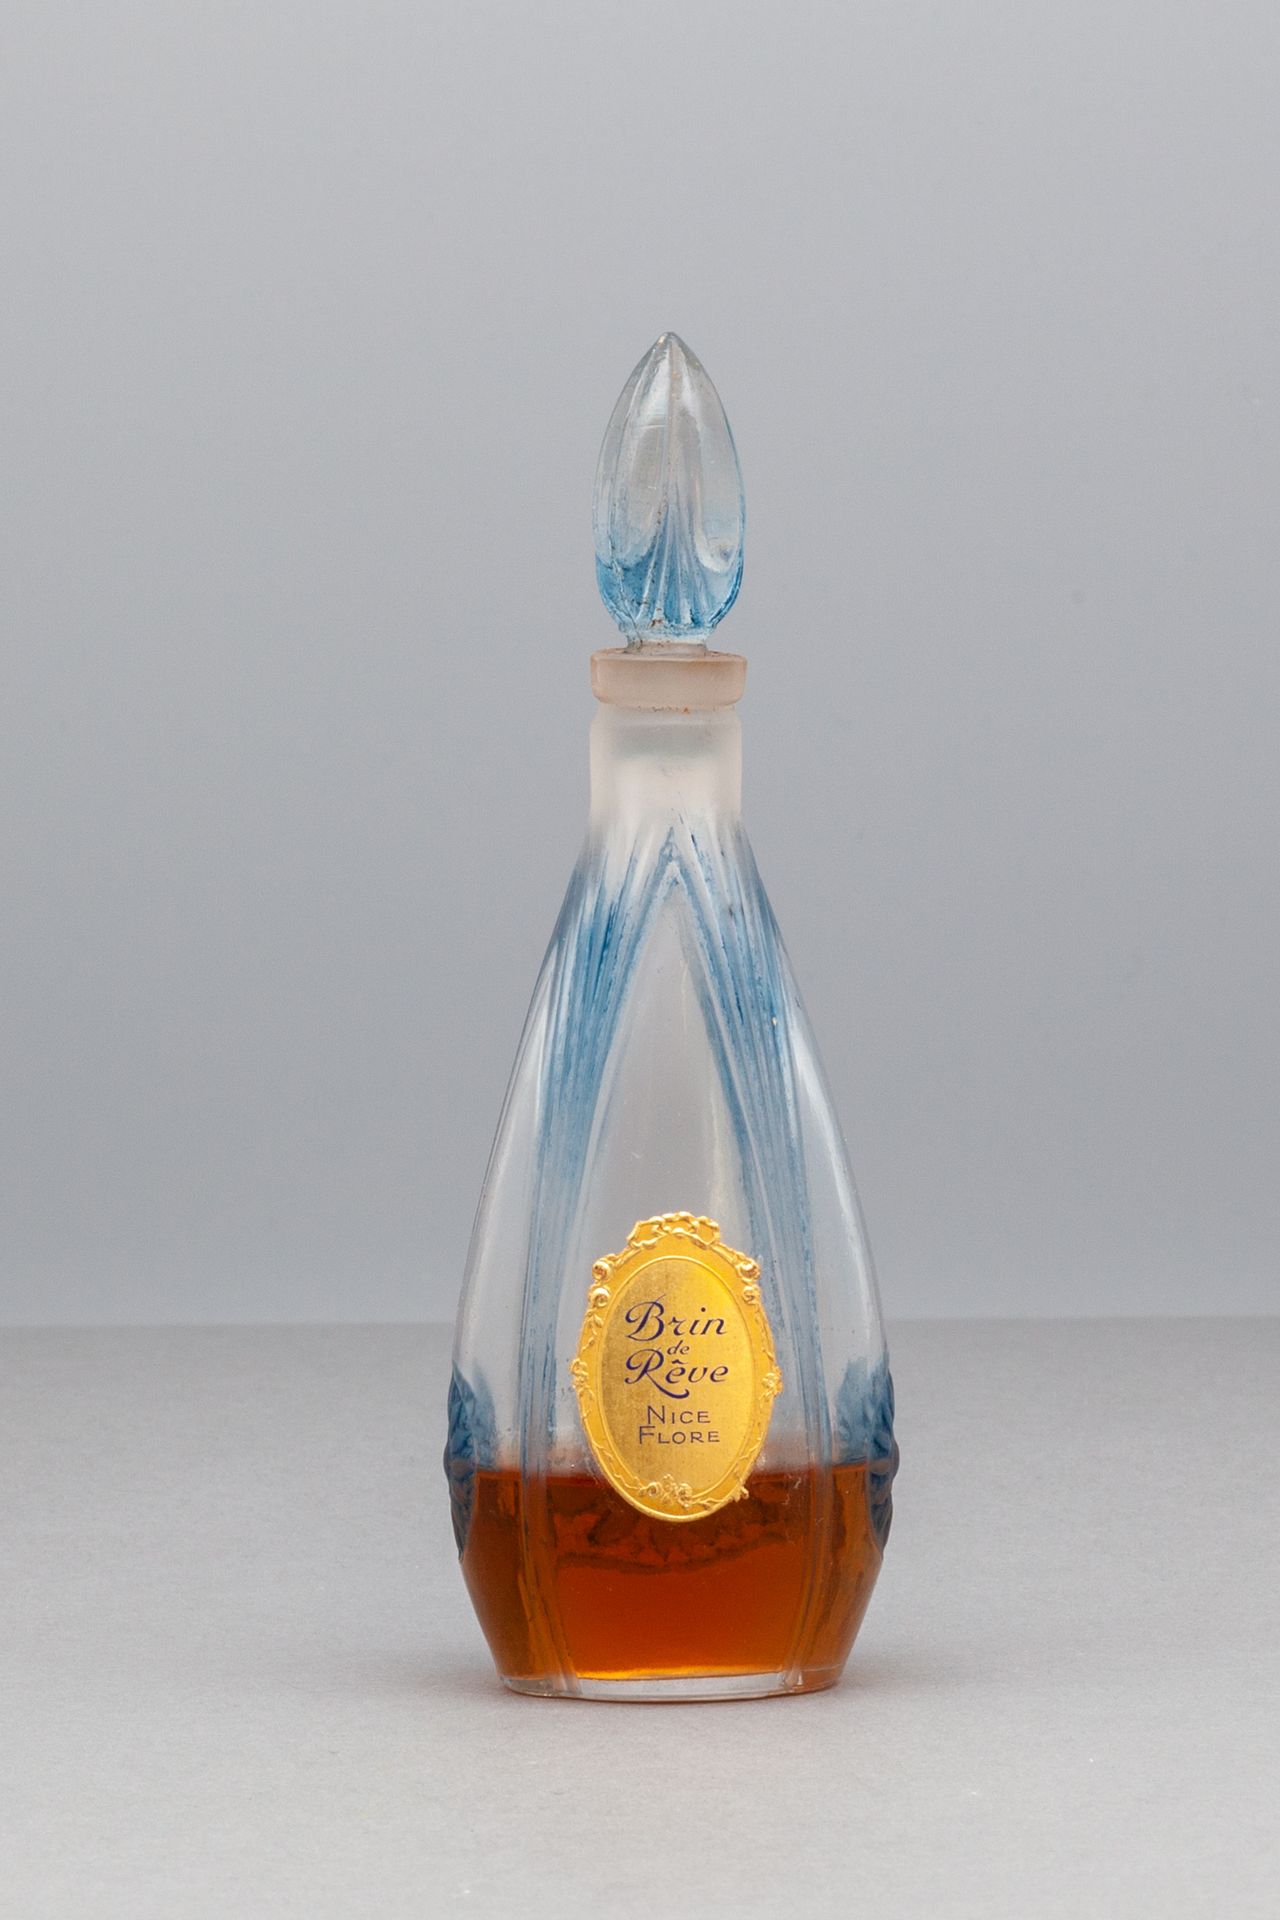 NICE FLORE "BRIN DE RÊVE" Tropfenförmige Glasflasche in blauer Farbe. H 14,5 cm